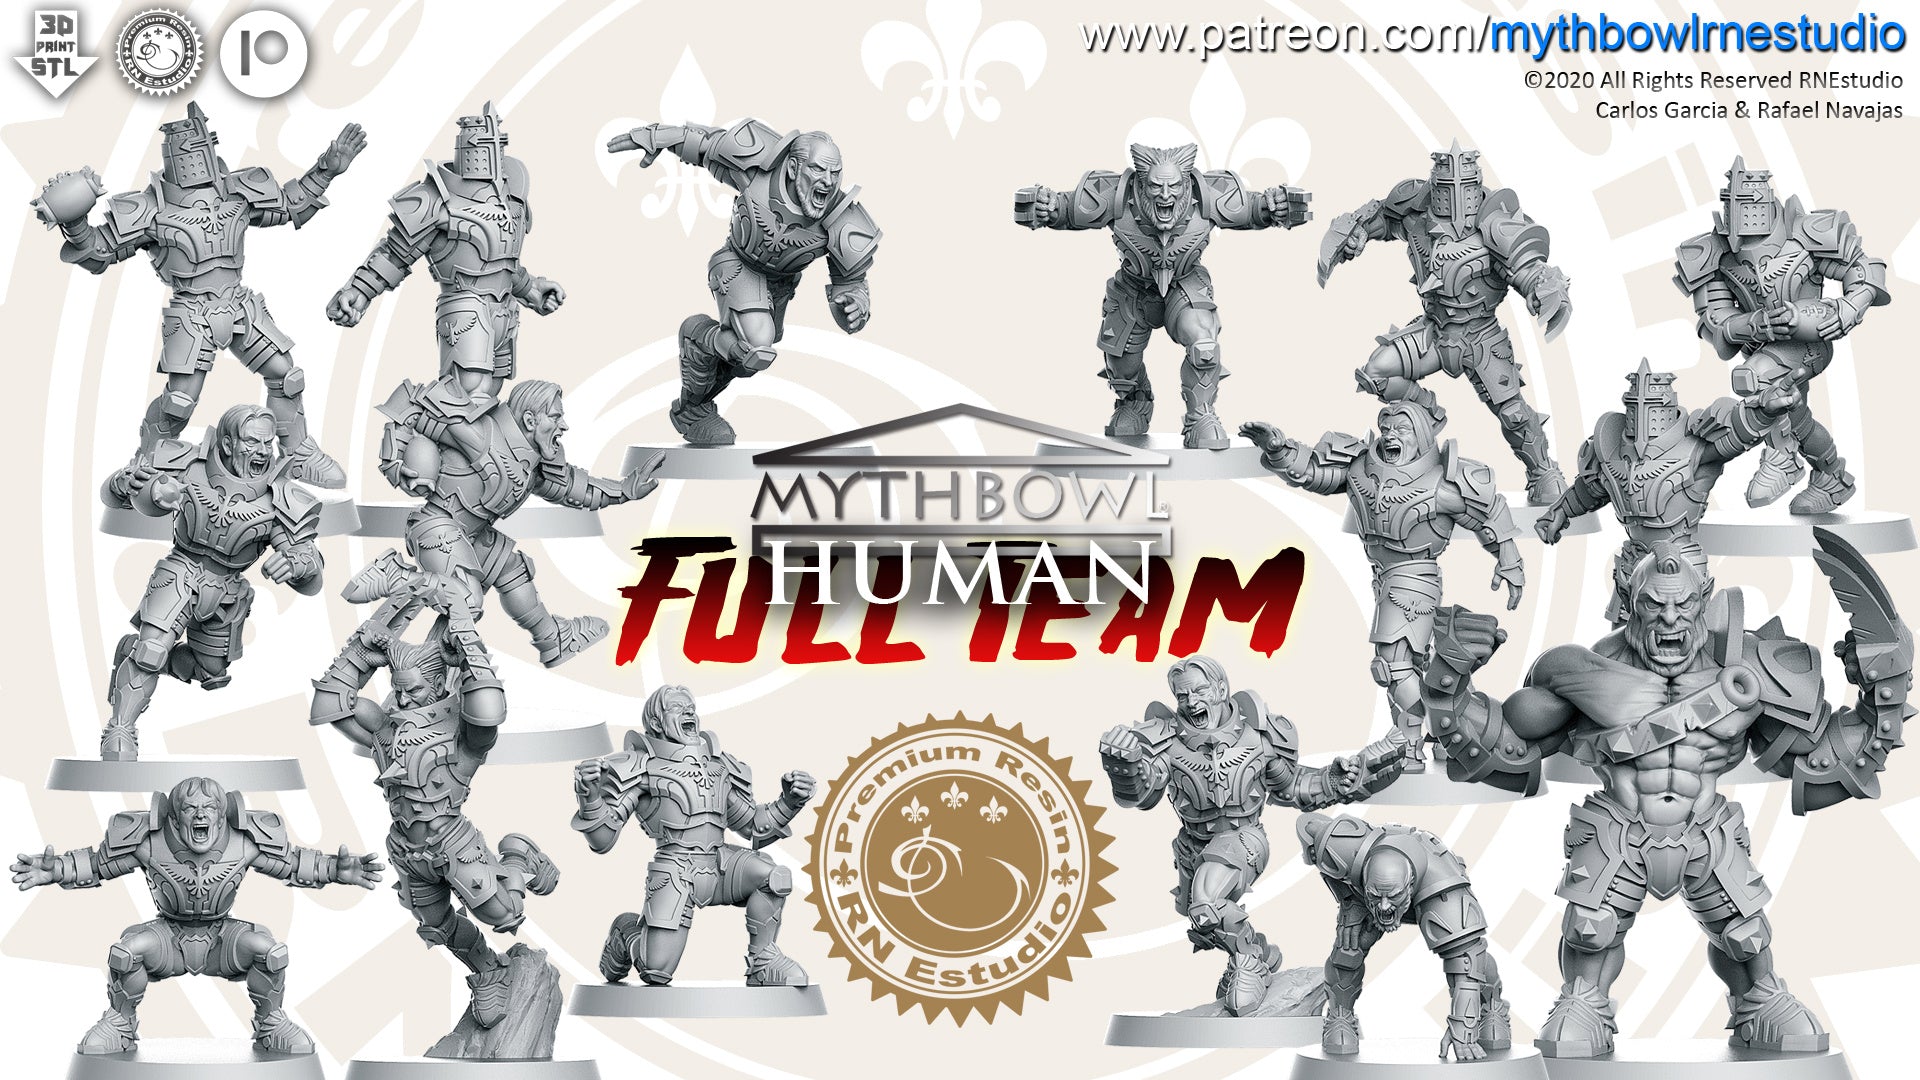 Human Team